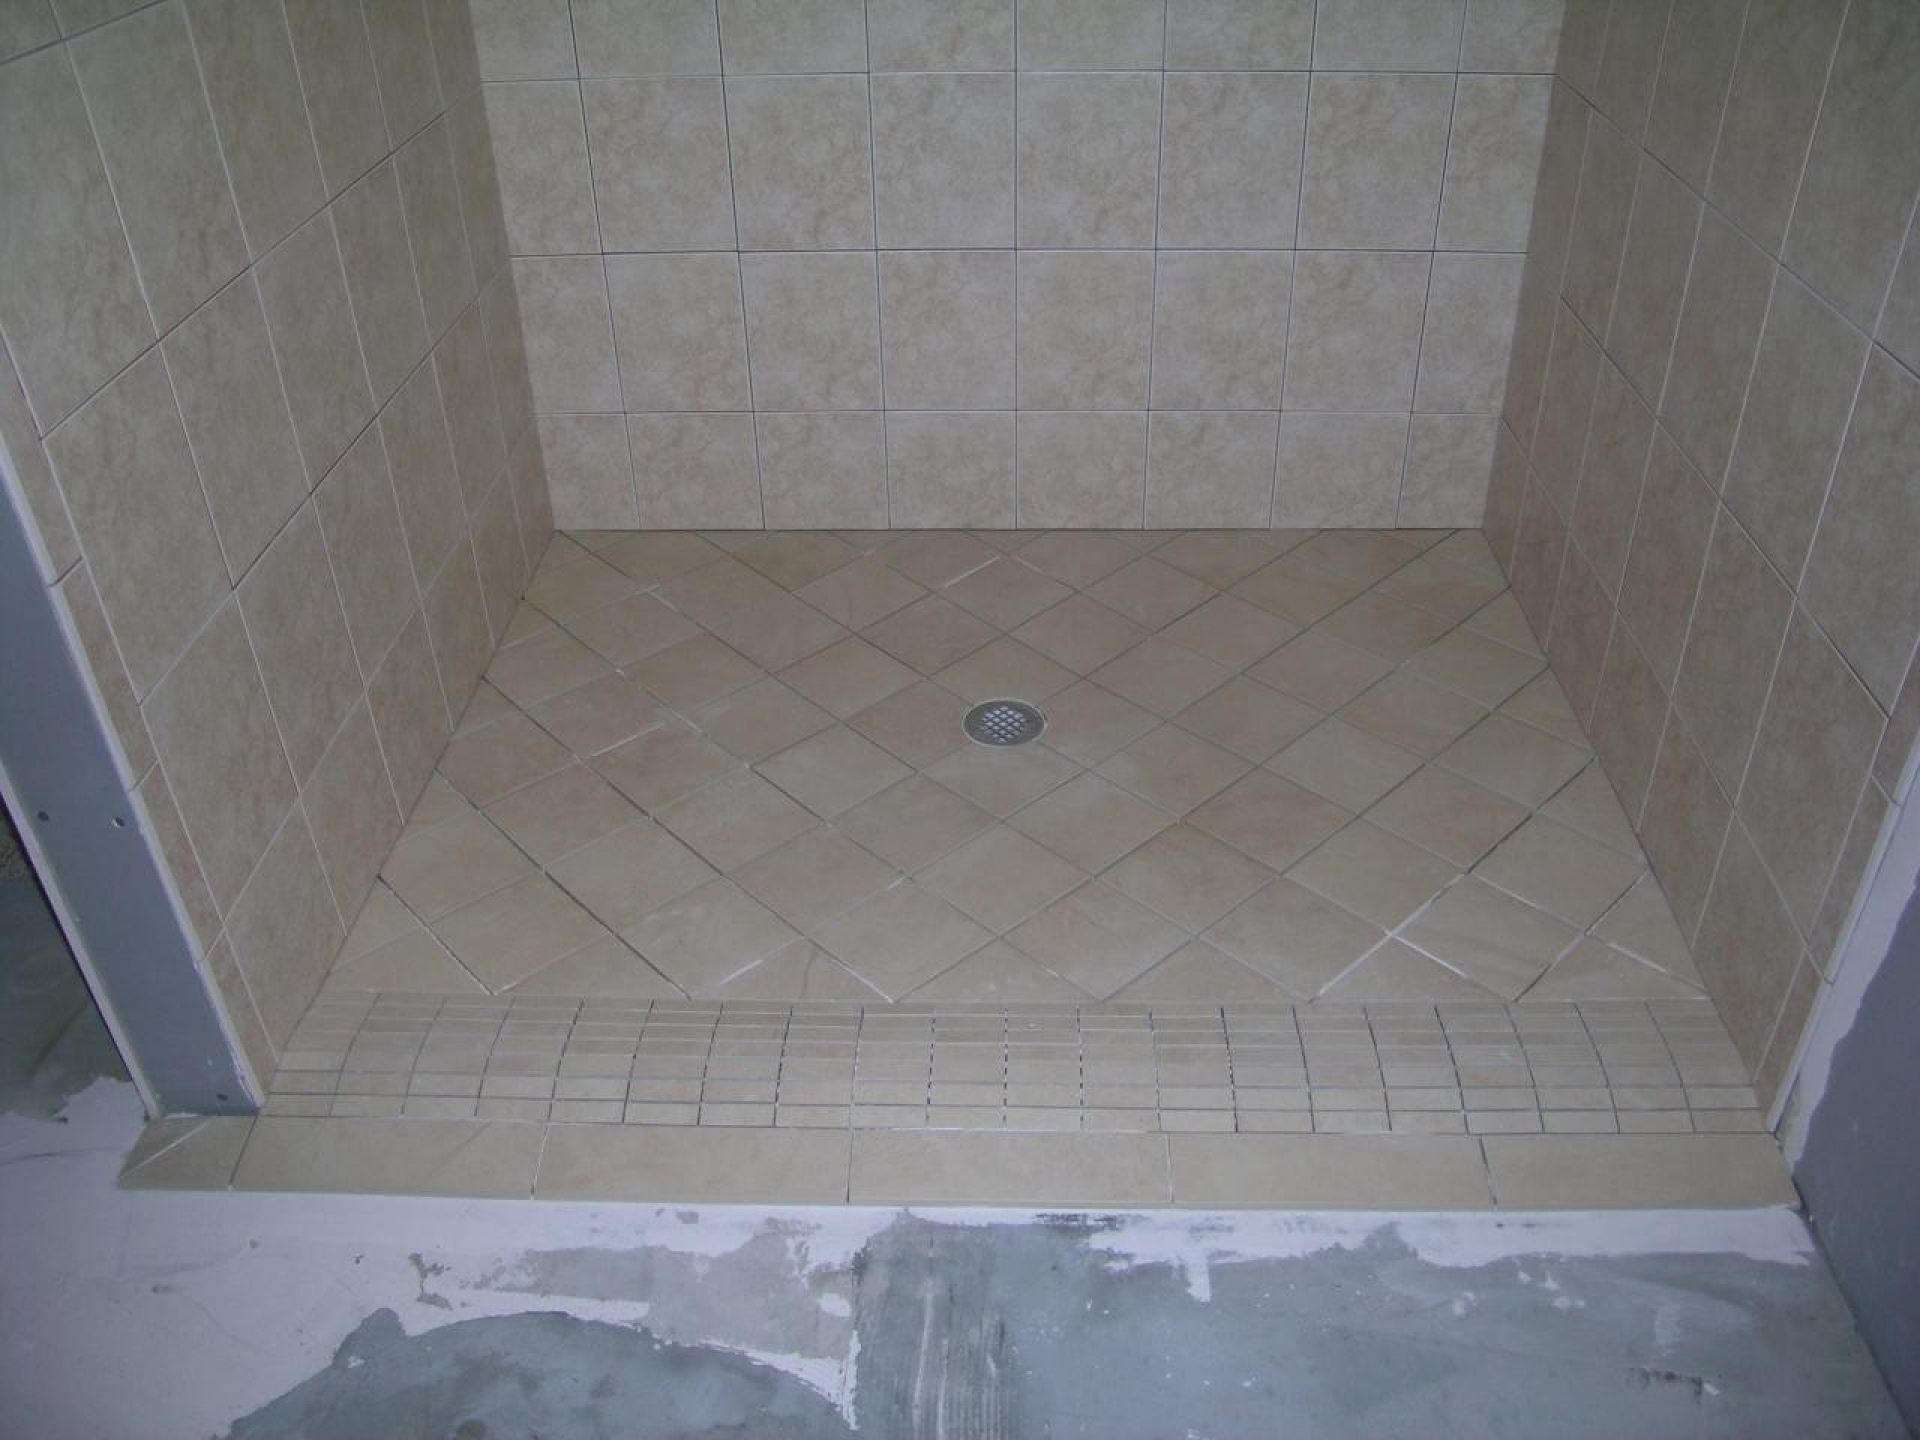 bathroom tile floor designs pictures photo - 7